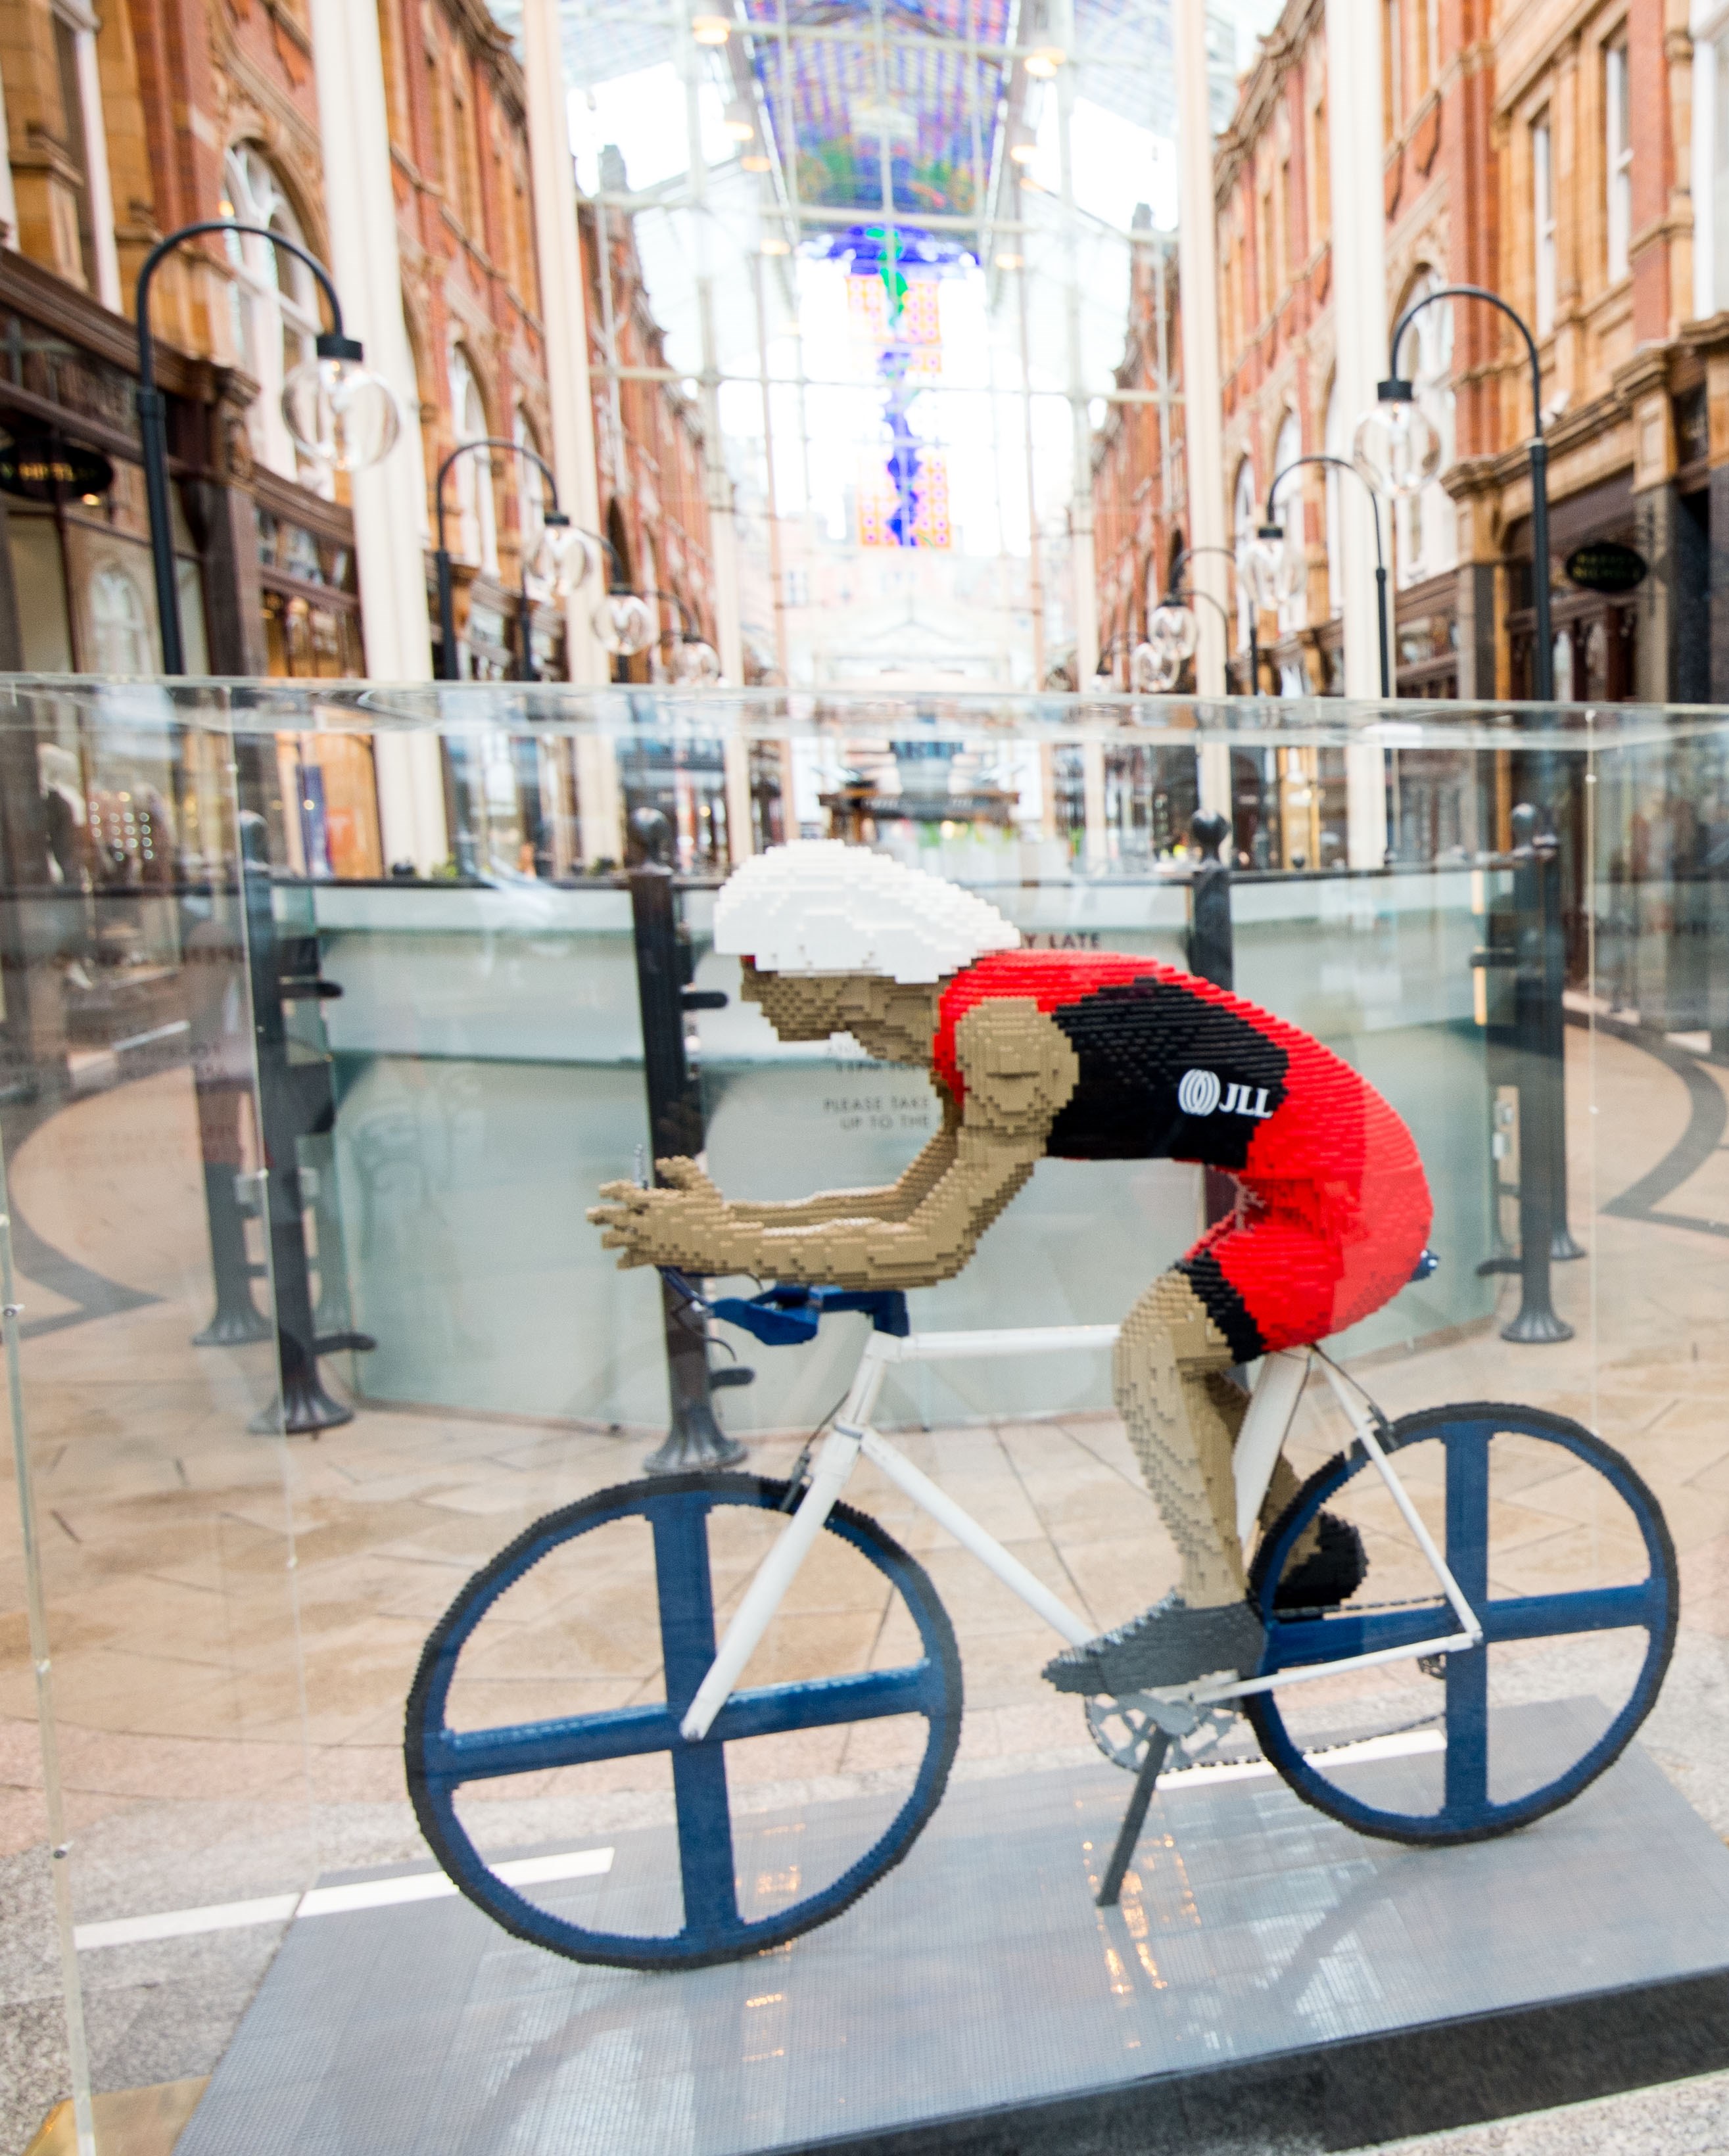 at retfærdiggøre rookie Macadam JLL's triathlon-inspired LEGO sculptures sprint up to Leeds